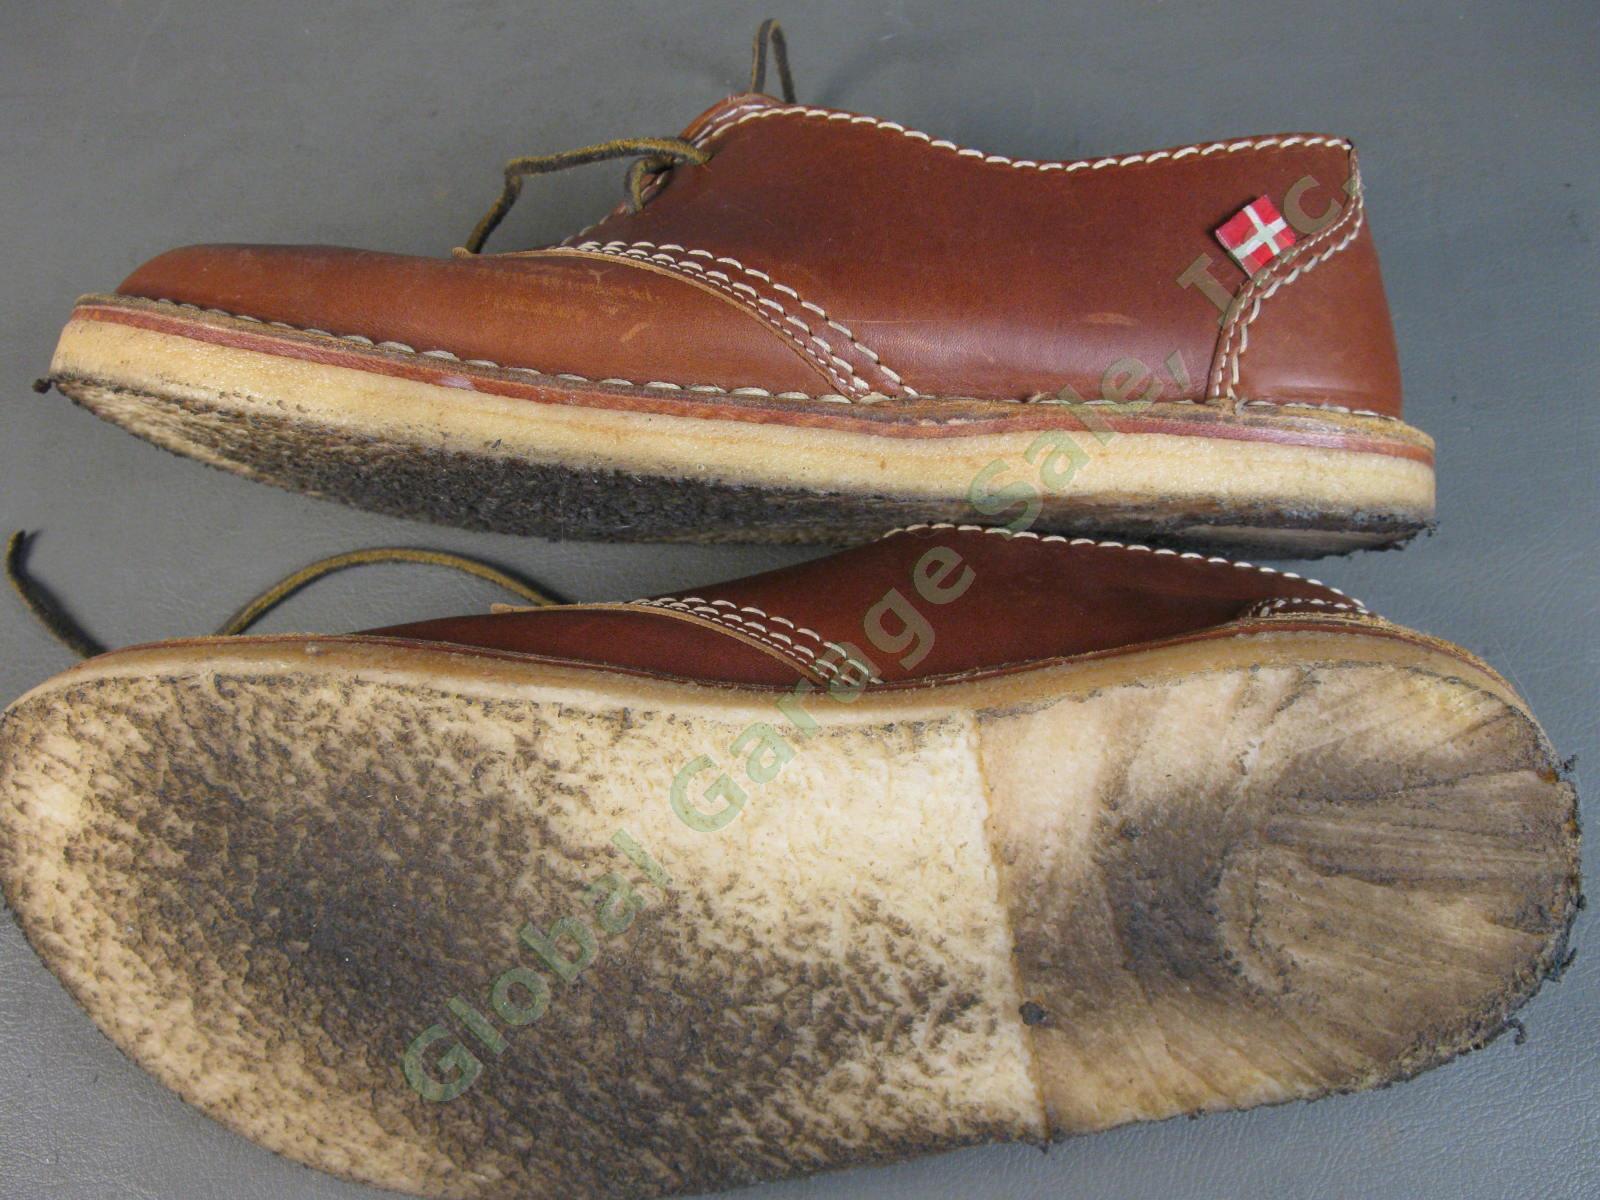 Original Danish Duckfeet Jylland EU 44 Brown Leather Lace Up Derby Shoes US 10.5 7